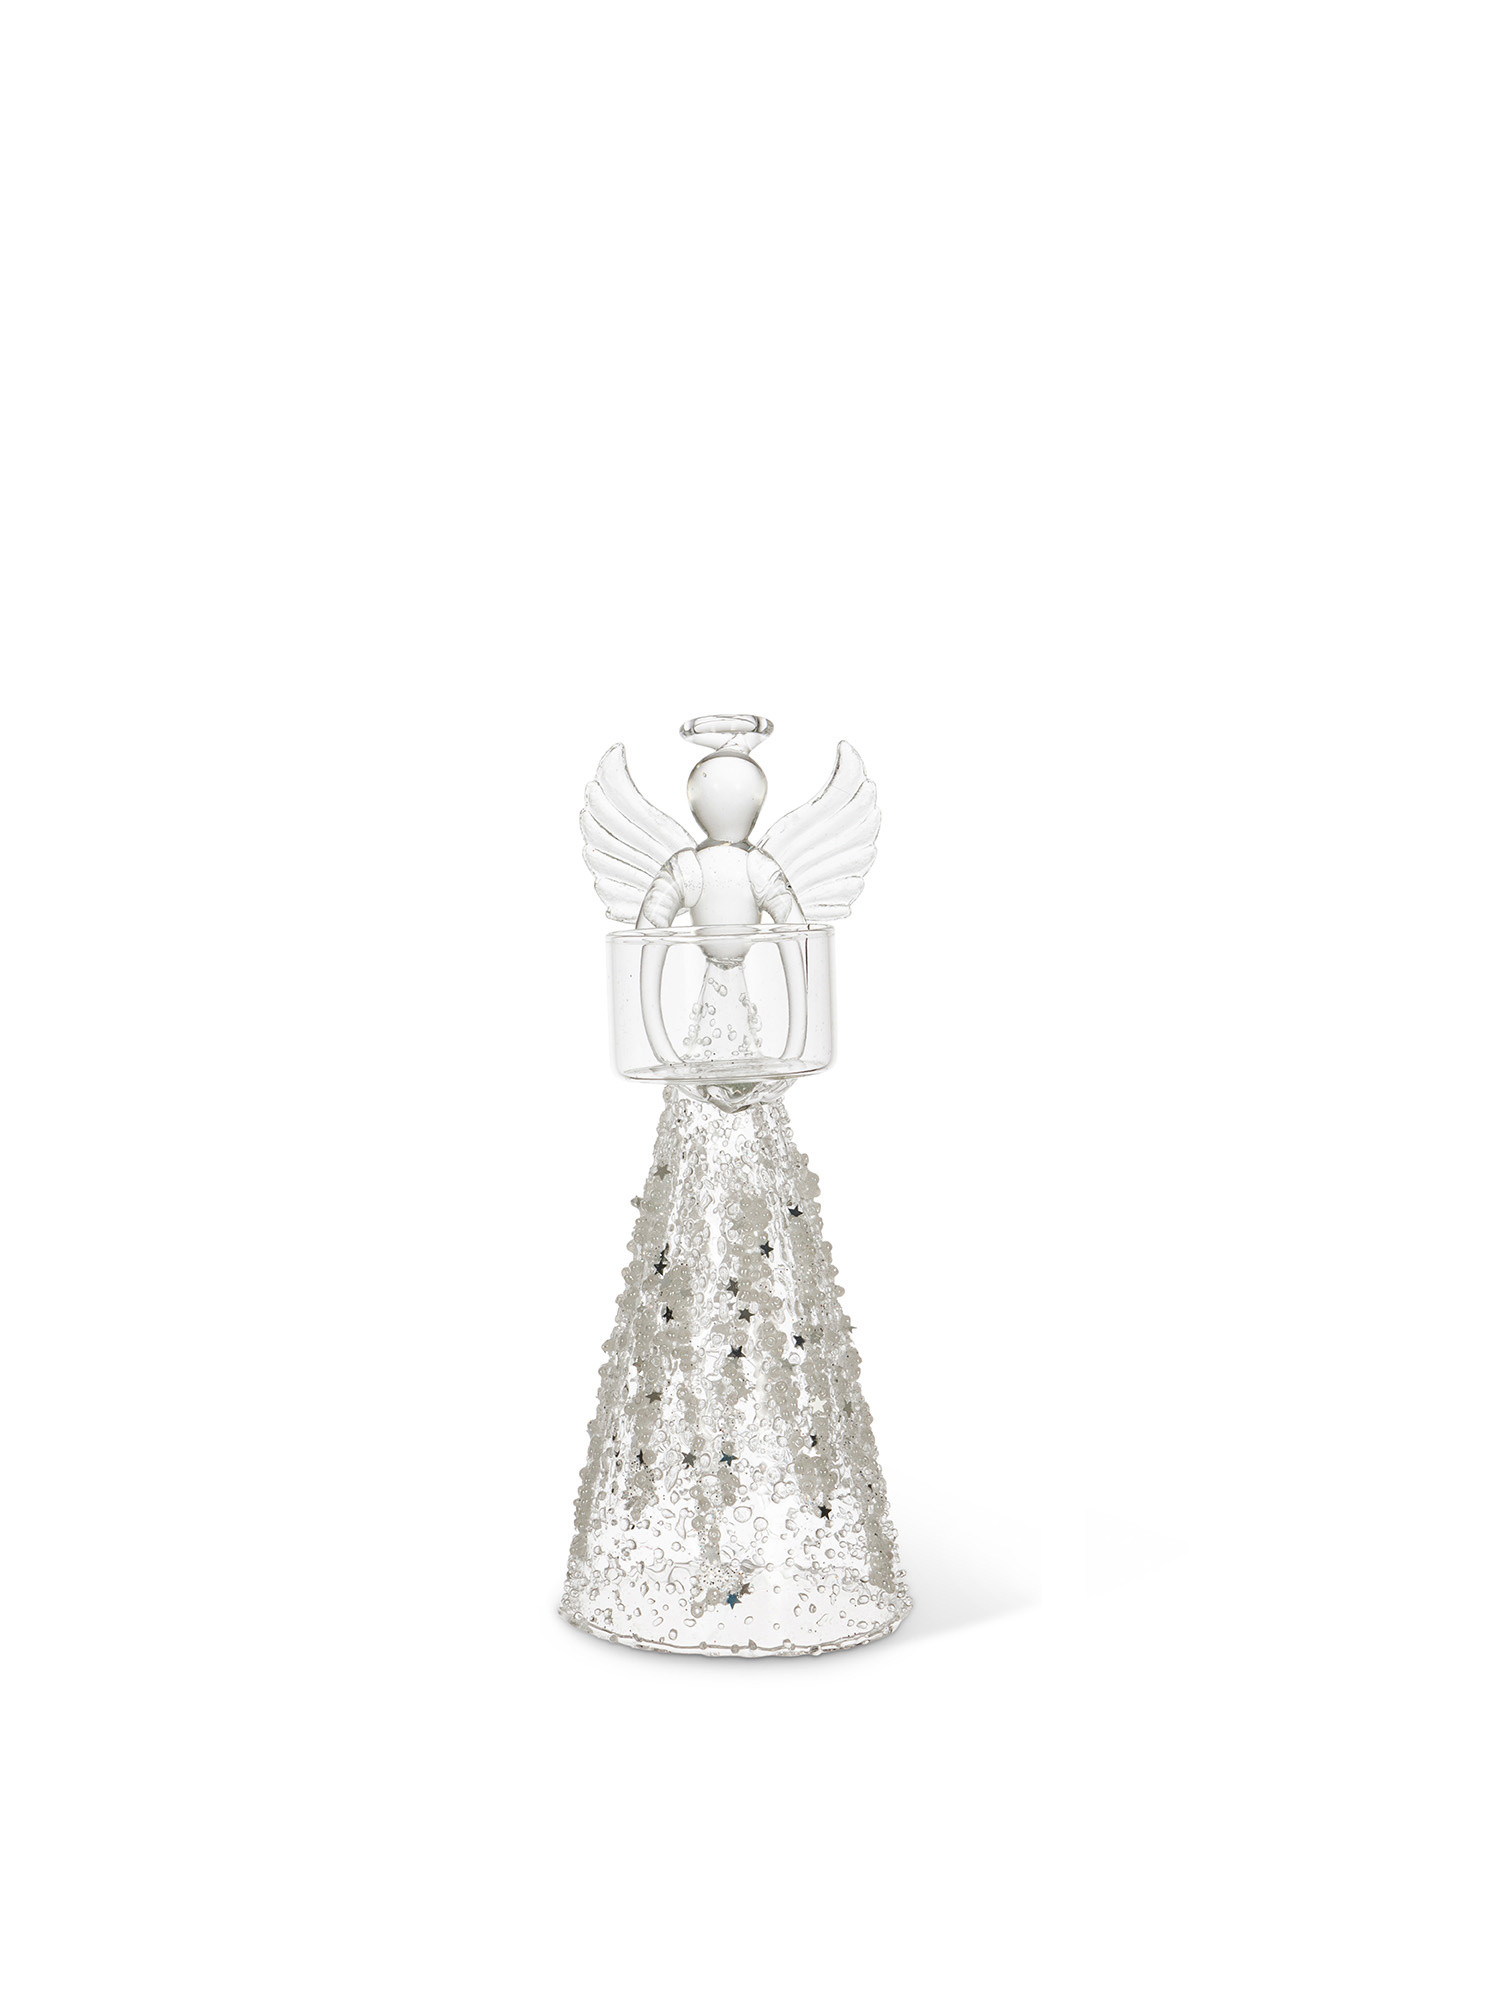 Decorative glass angel with t-light holder, Transparent, large image number 0